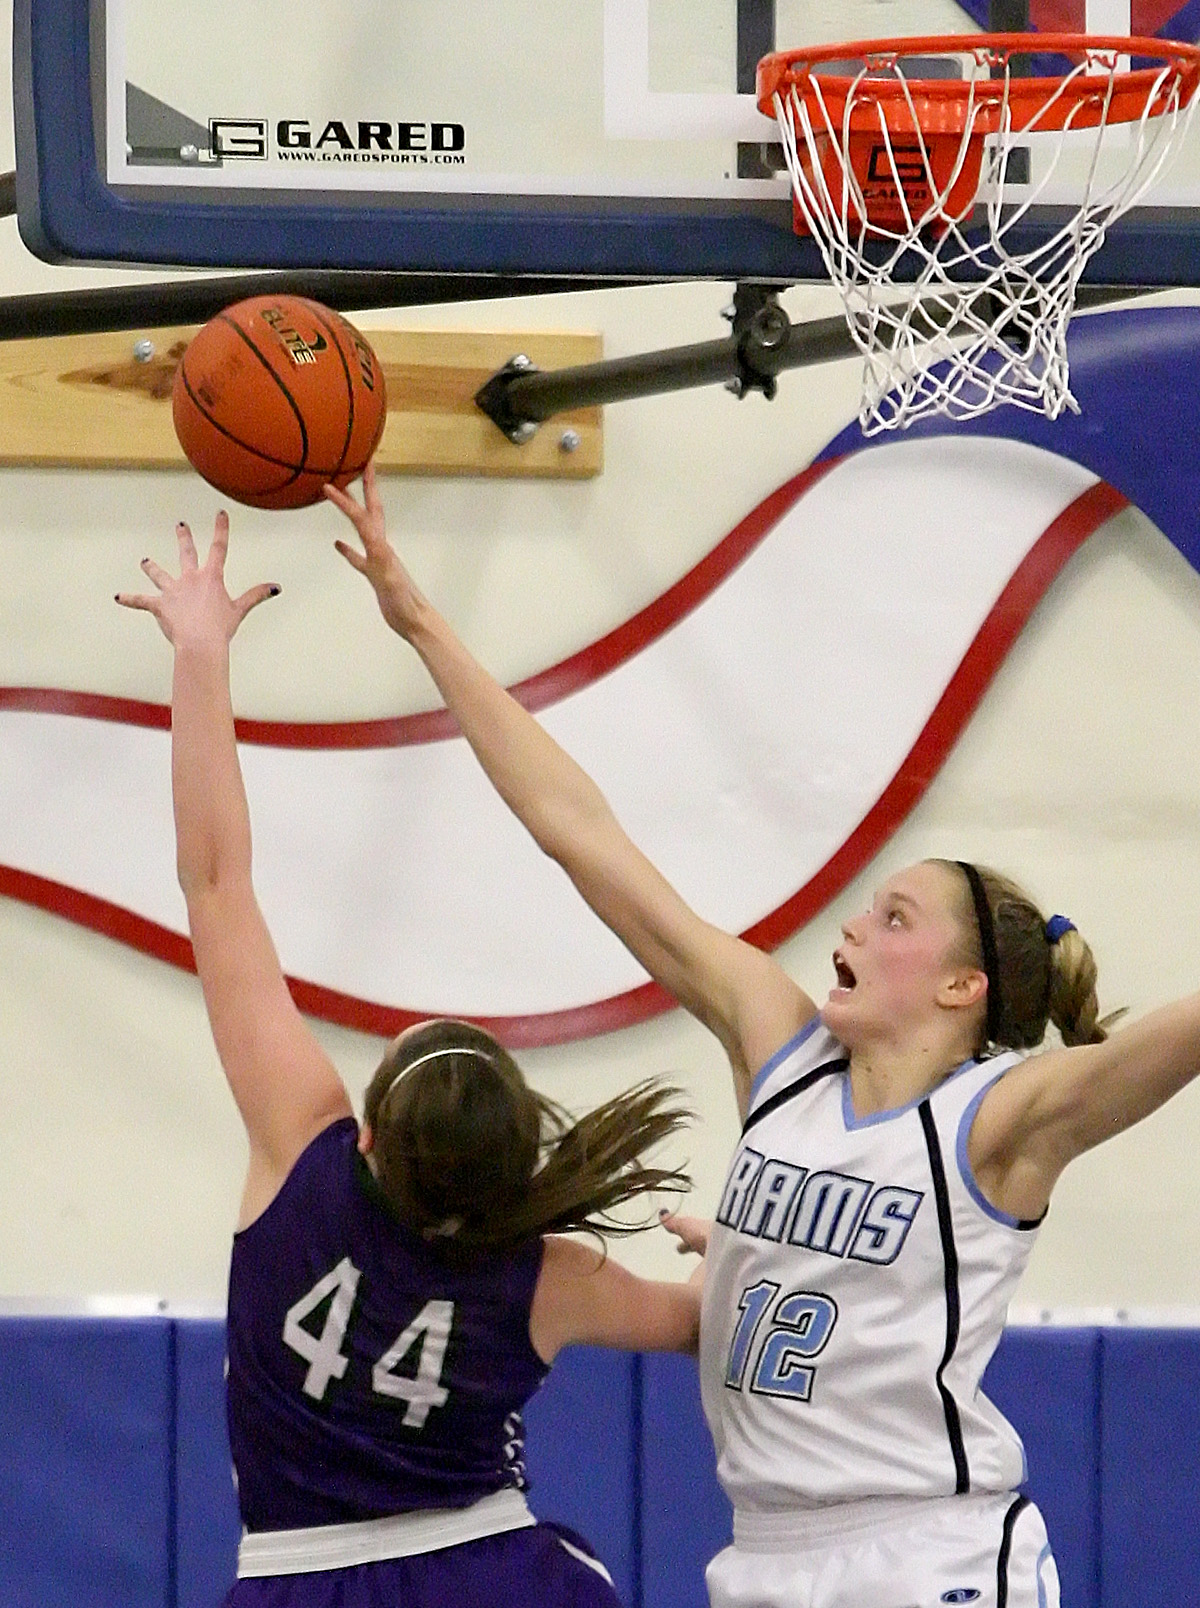  Flashback to high school: Defensive specialist, Brittany McPhee of Mt Rainier High School, blocks a shot near the basket.